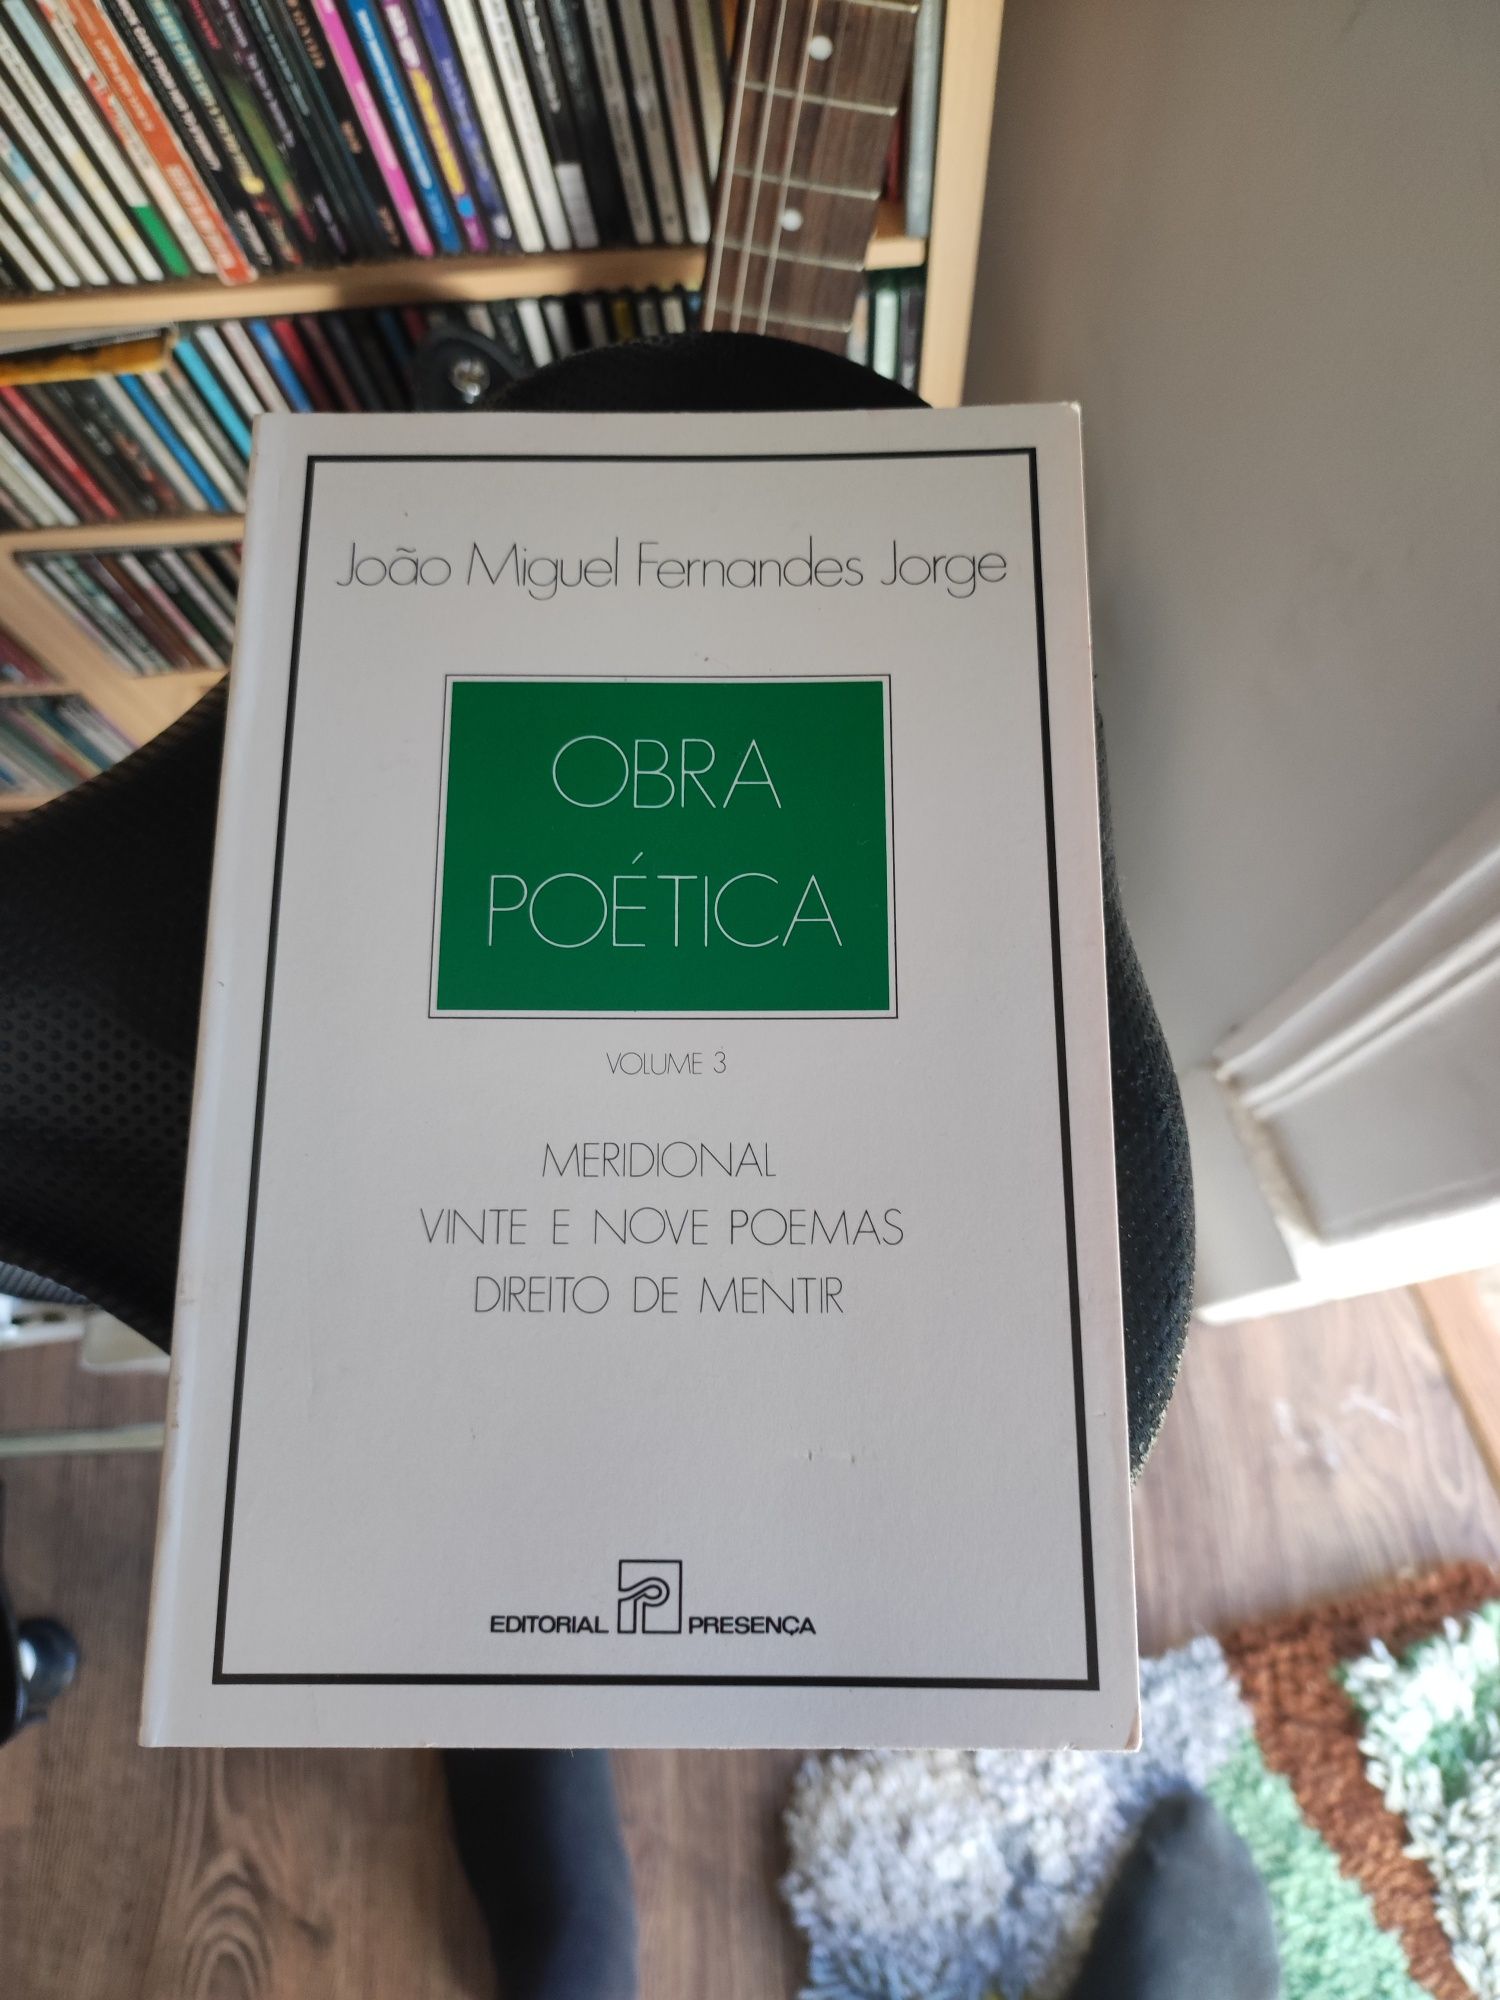 João Miguel Fernandes Jorge - Obra Poética, volume 3